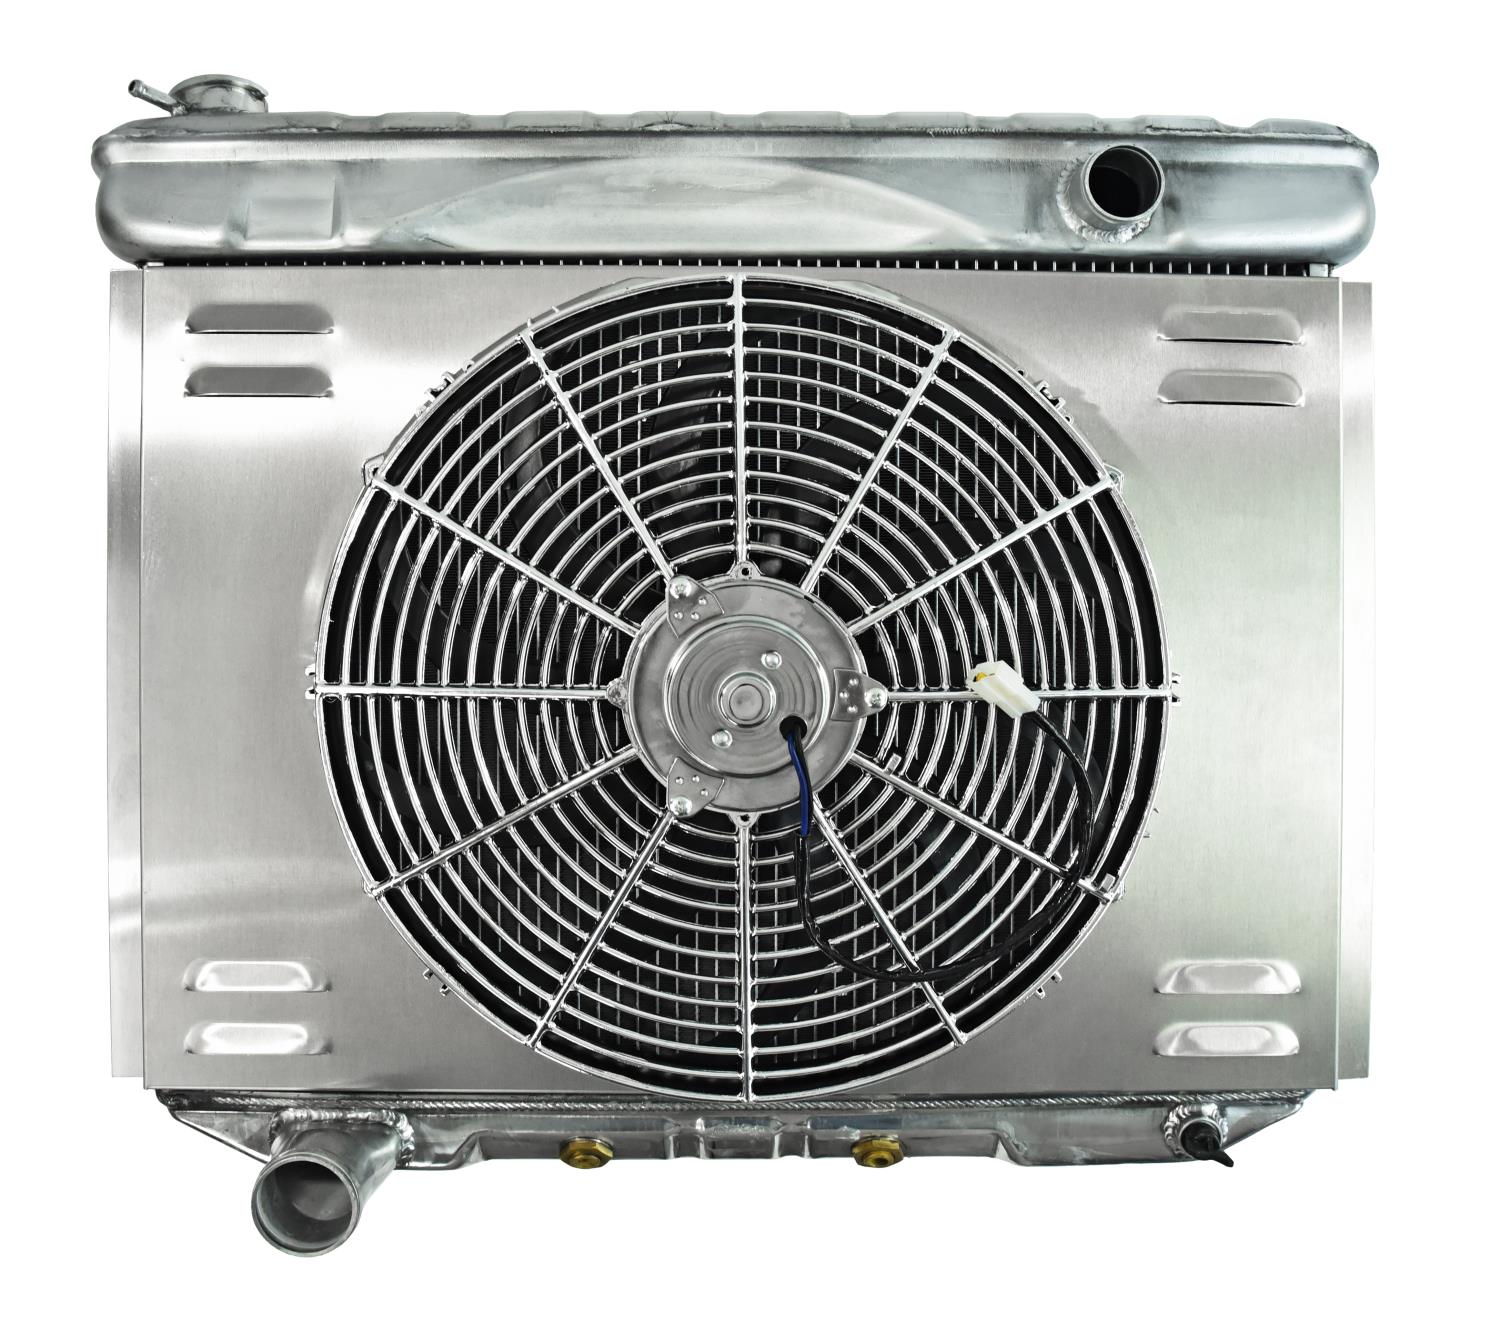 Aluminum Radiator & Fan Combo for Select 1957-1959 Ford & Mercury V8 Models [16 in. Fan]